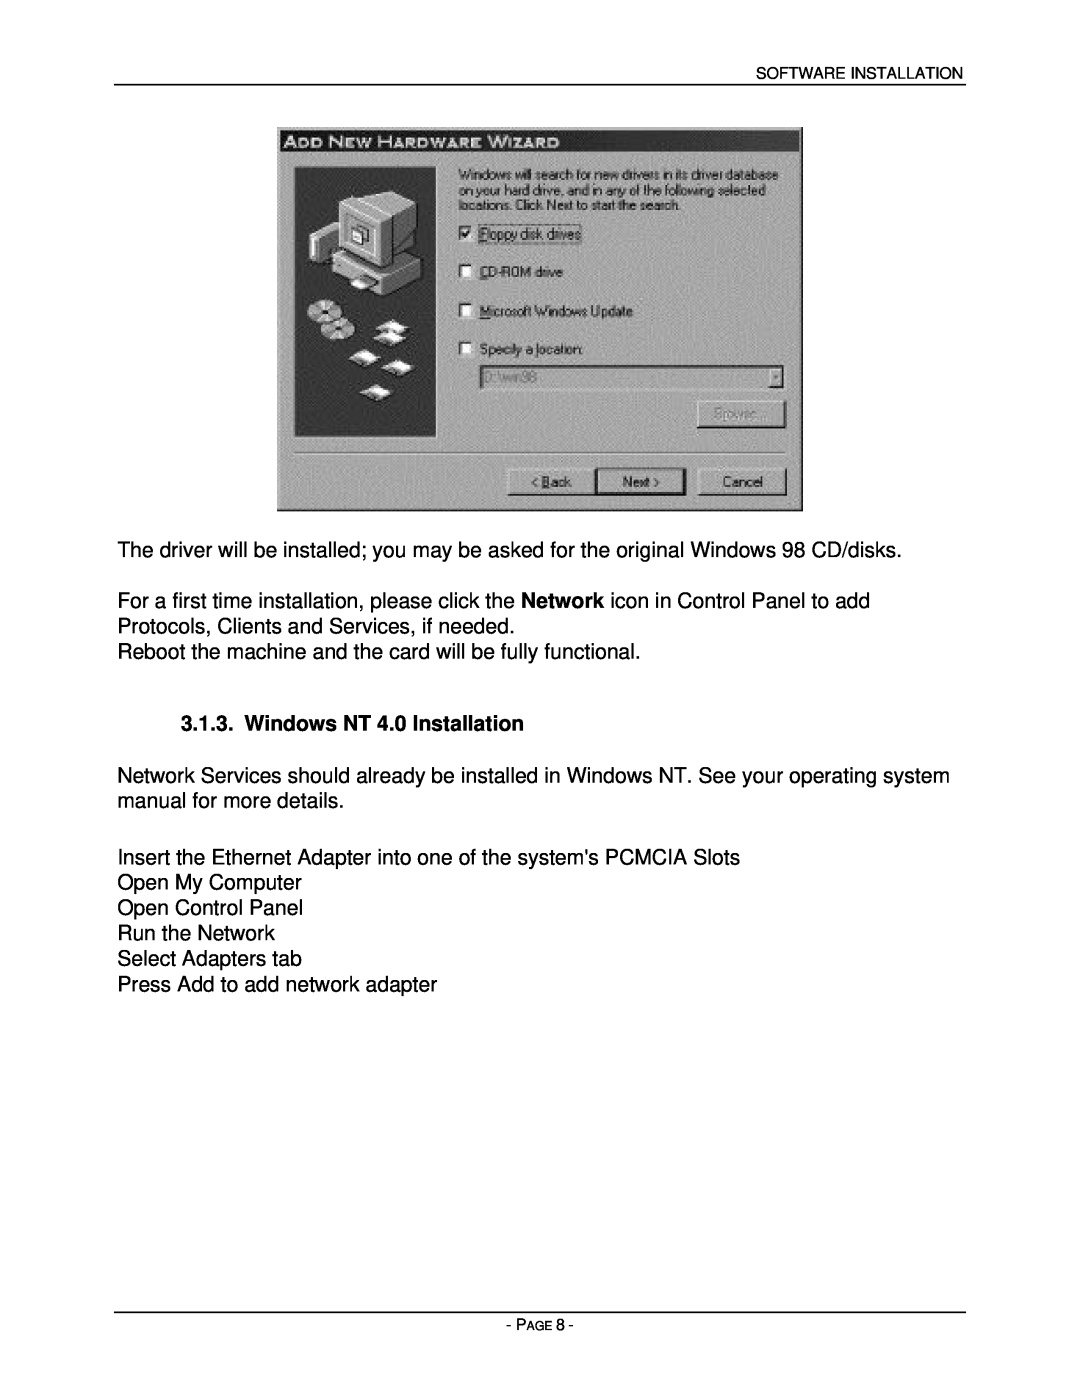 Asante Technologies PCMCIA user manual Windows NT 4.0 Installation 